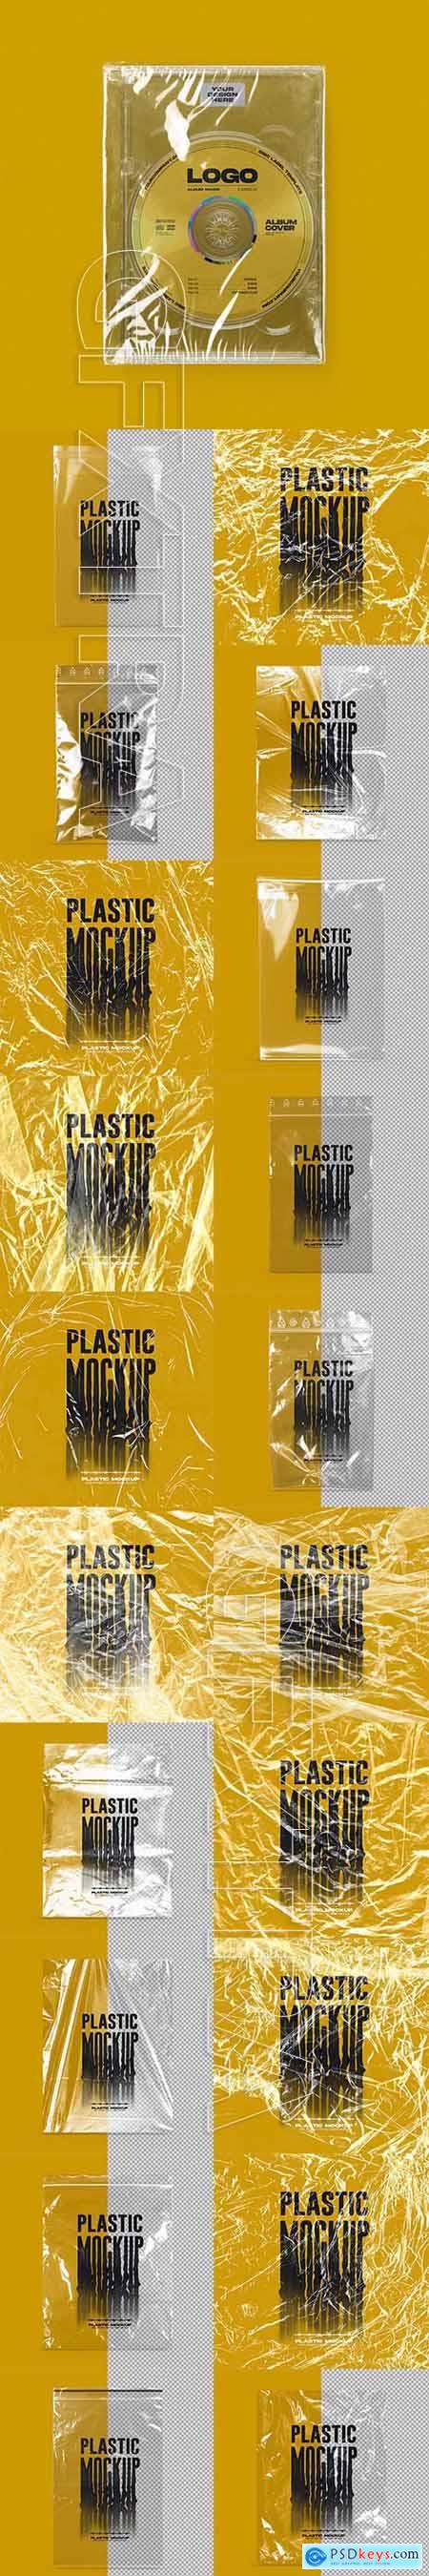 Plastic mockup Bundle